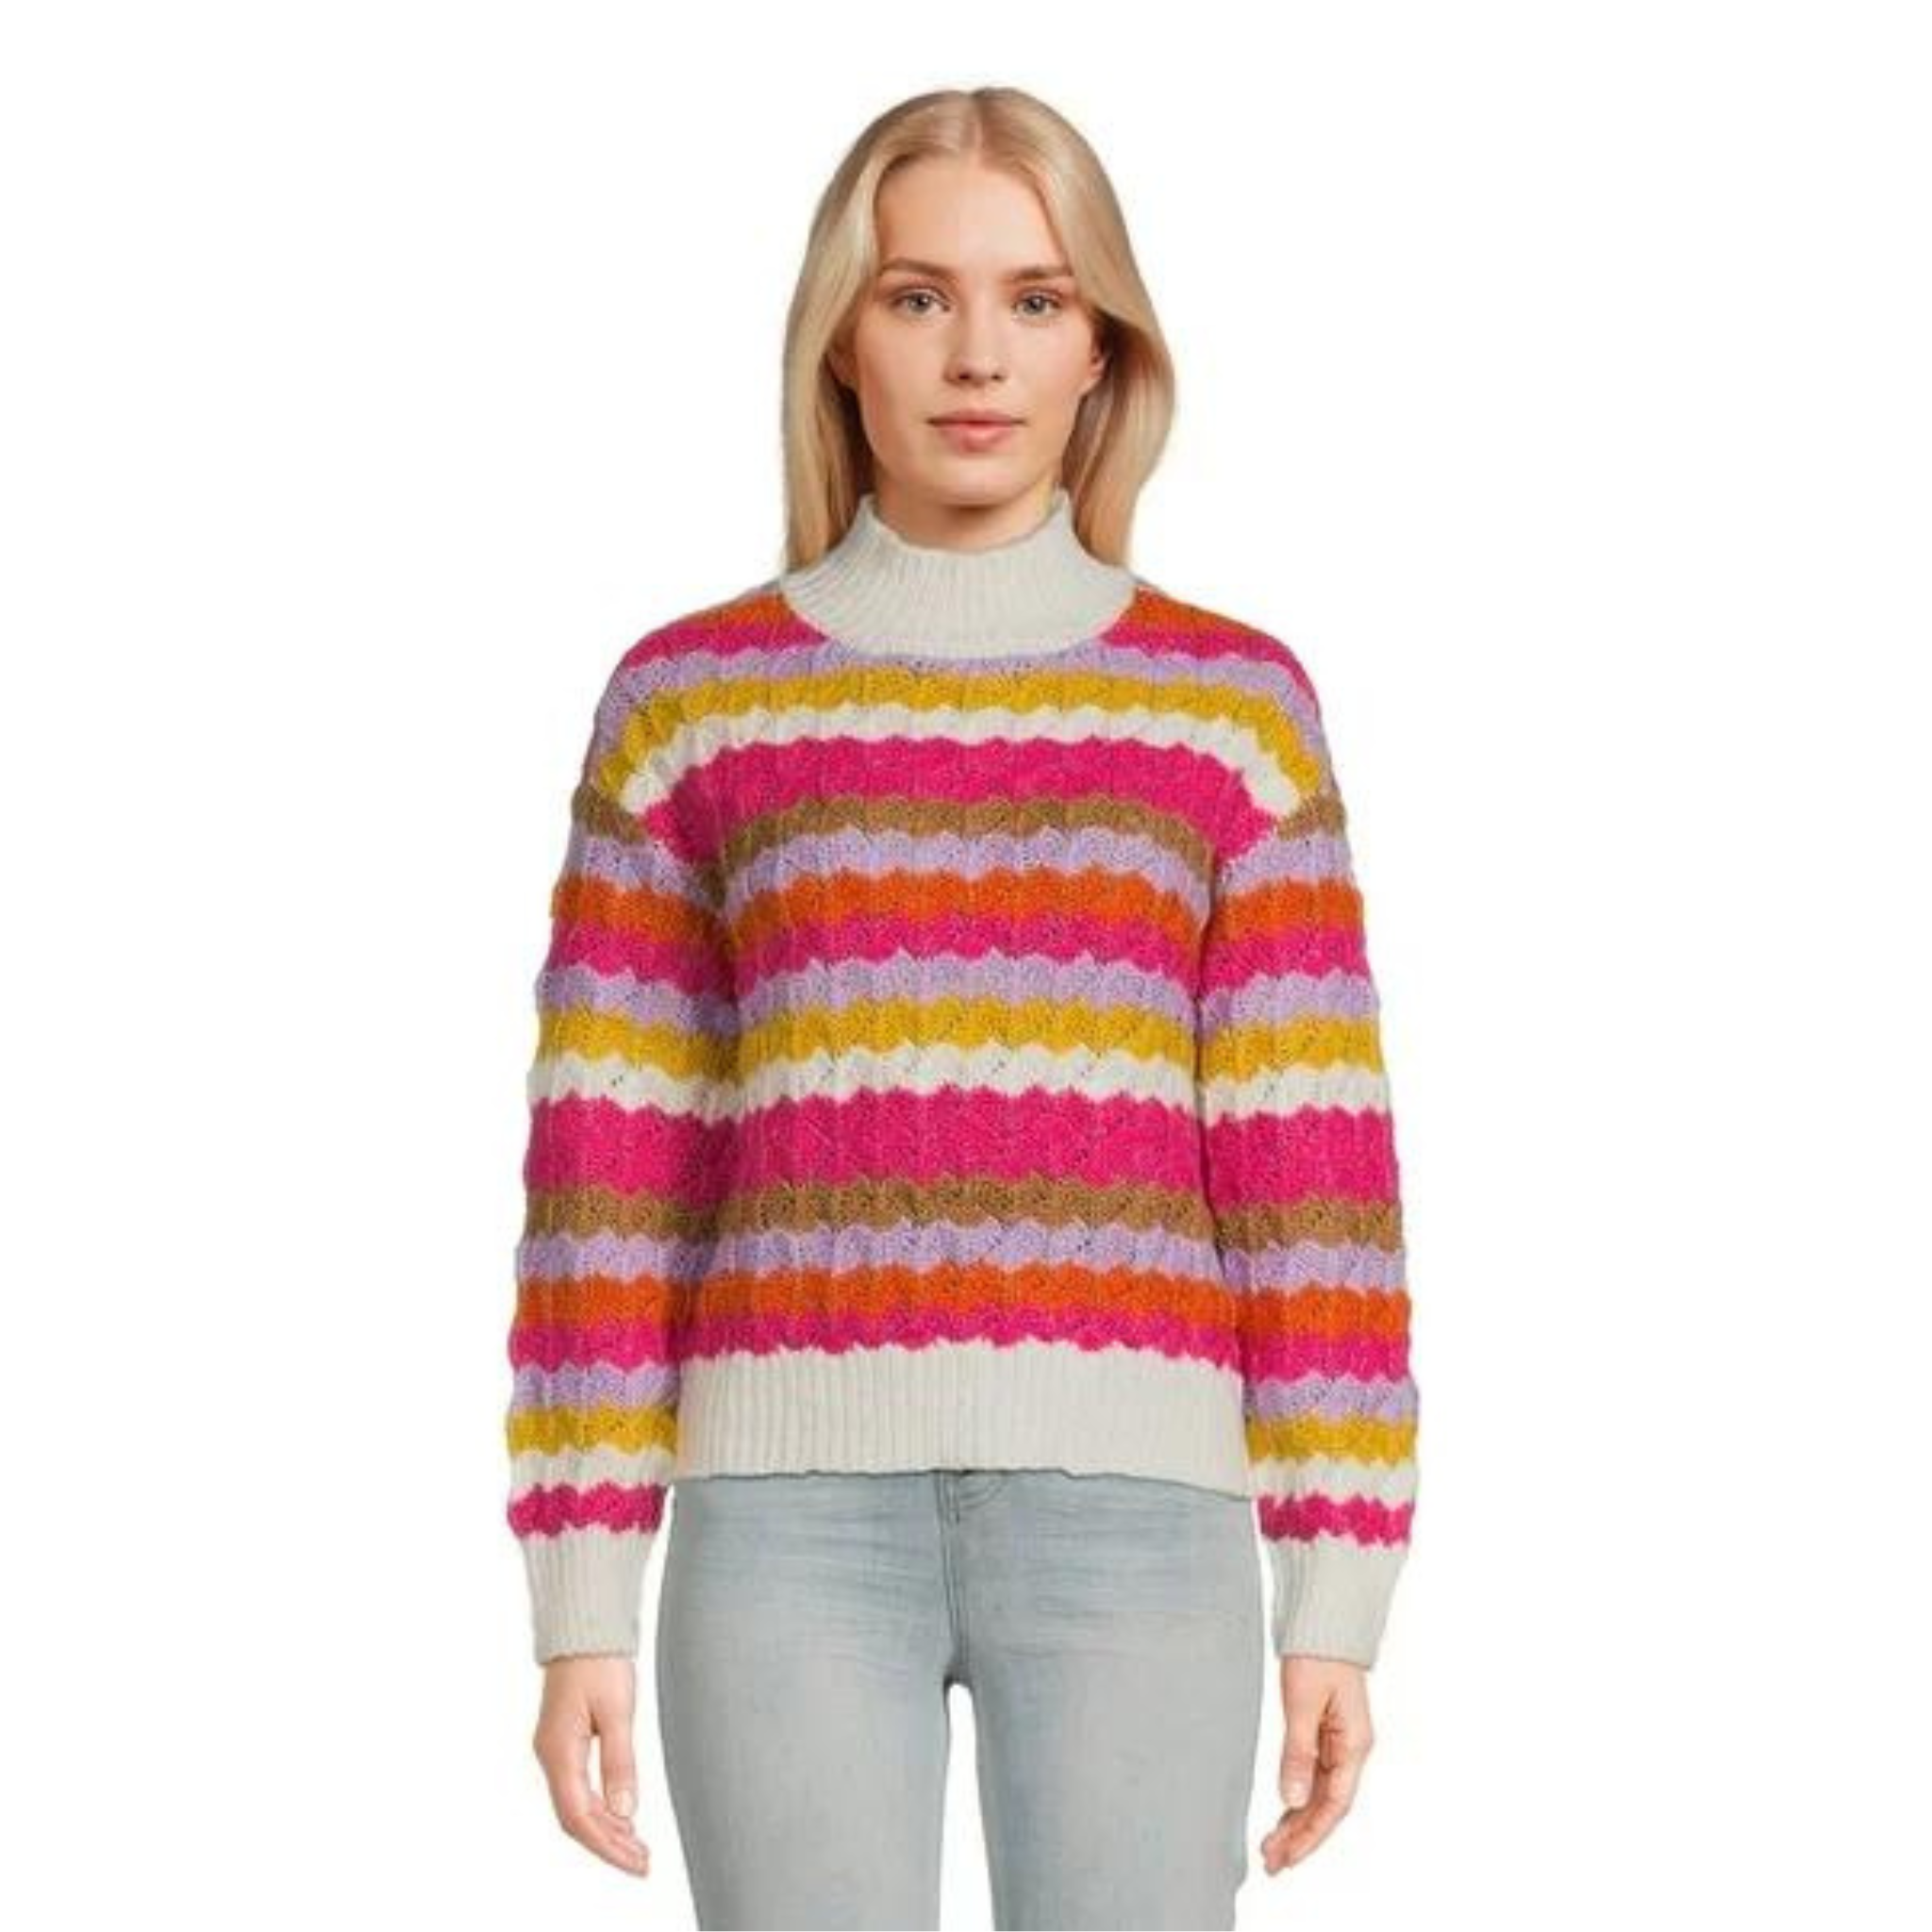 Walmart Mock Neck Pullover Sweater (5 COLORS)